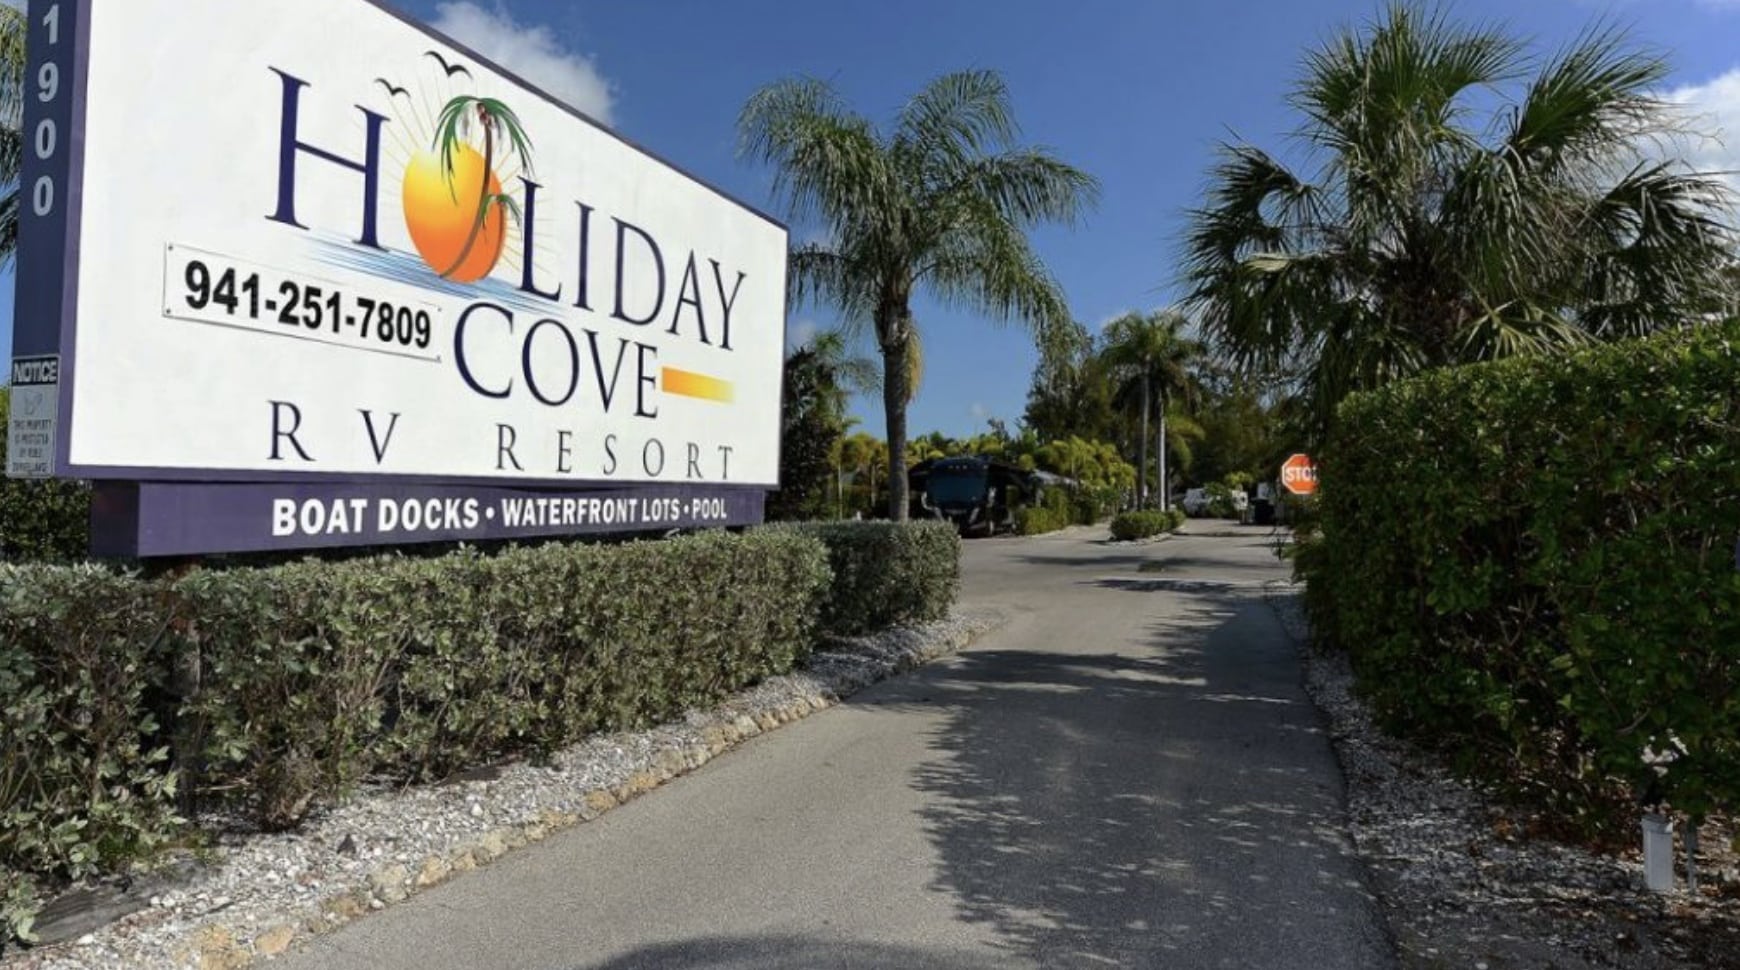 Holiday Cove RV Resort